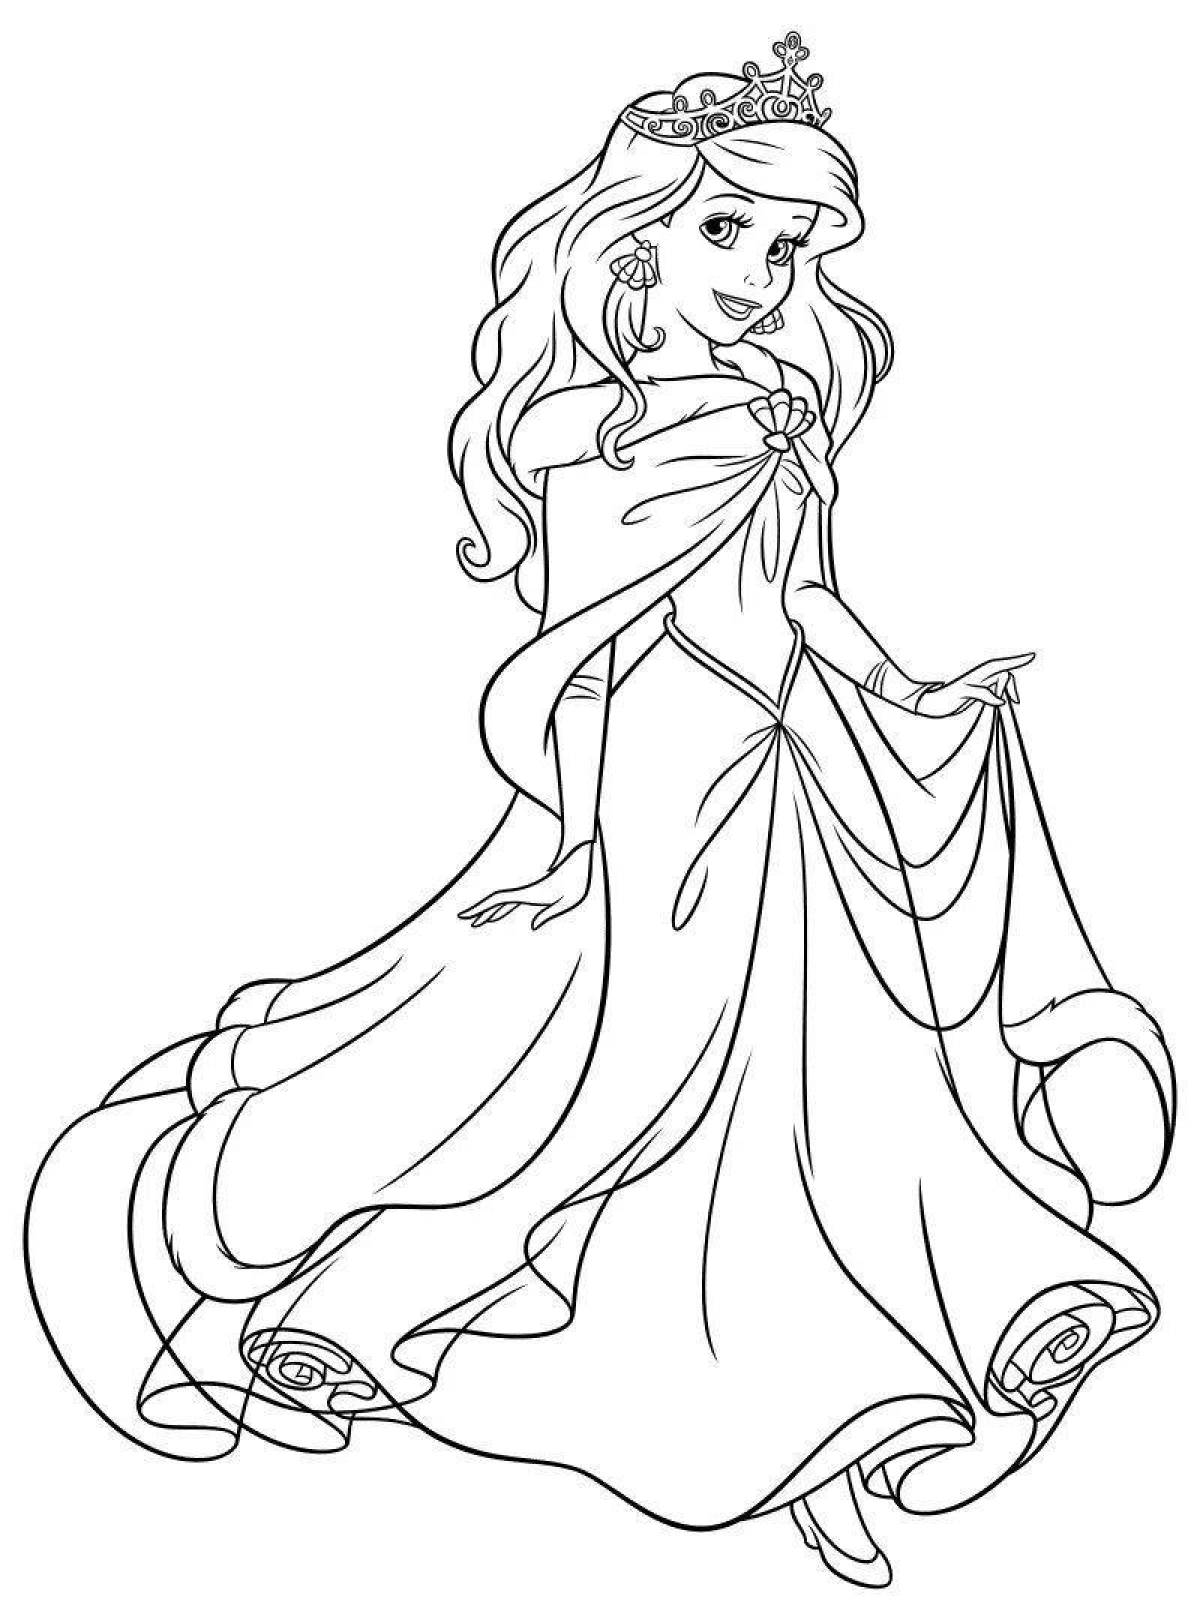 Coloring page graceful princess